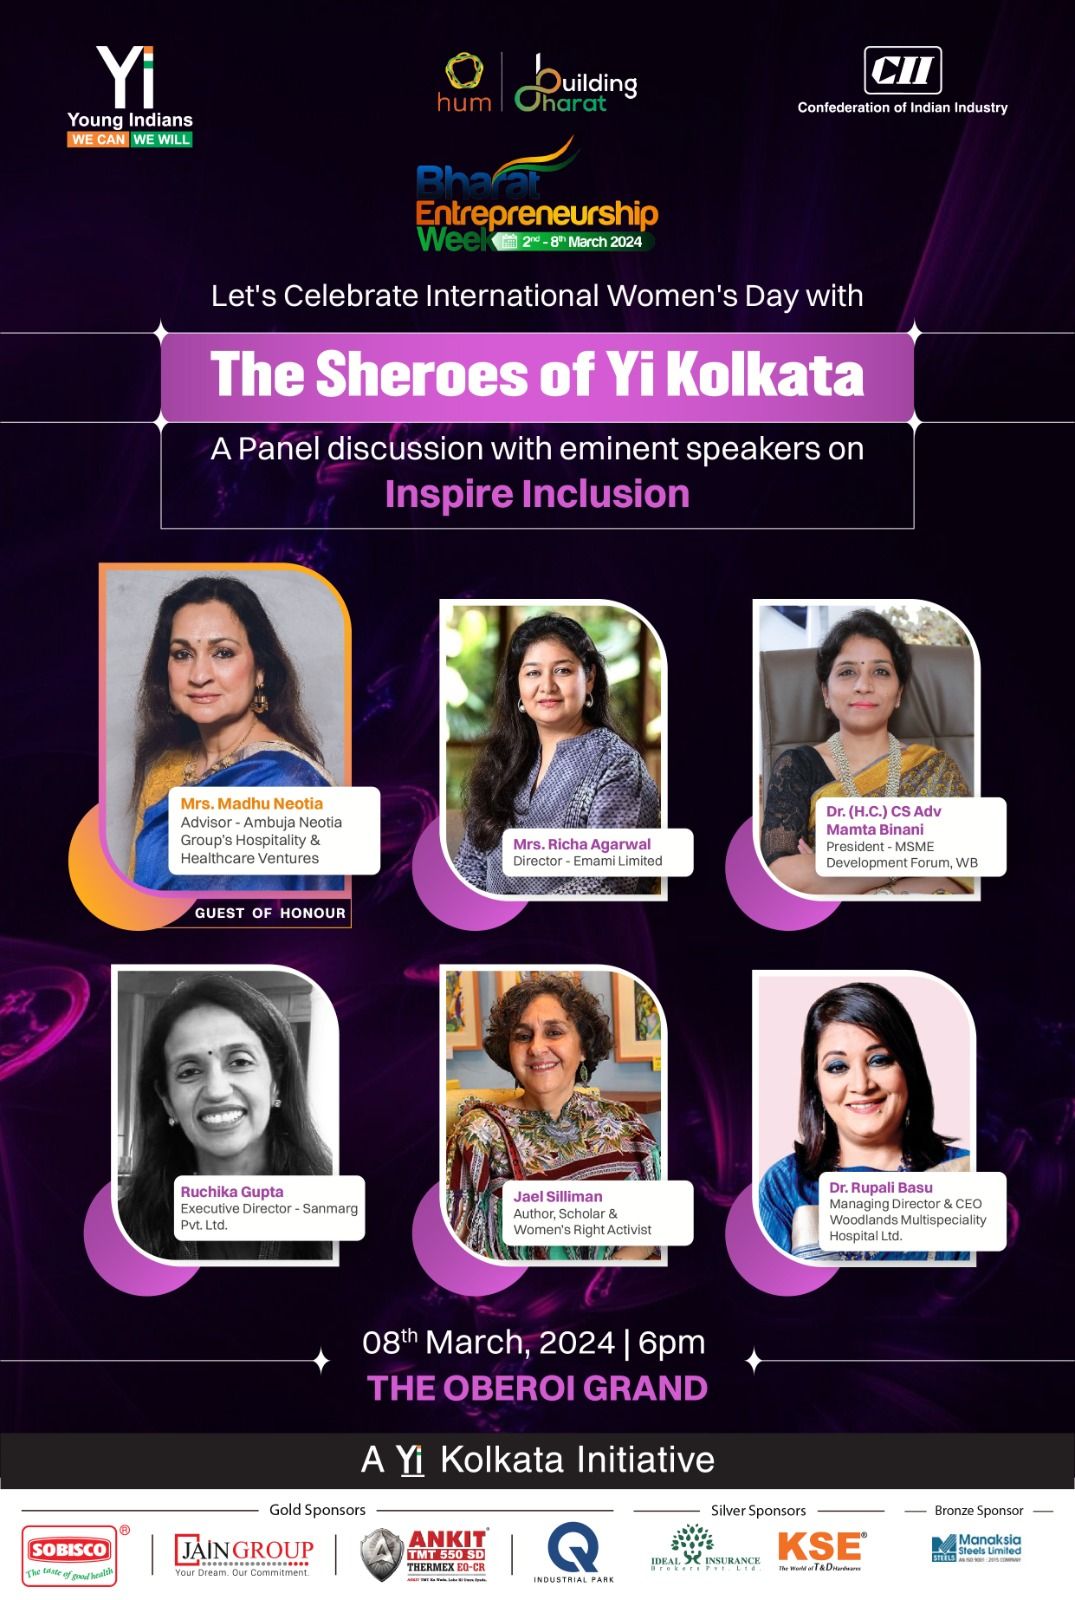 Yi24 | The Sheroes of Yi Kolkata - Bharat Entrepreneurship Week